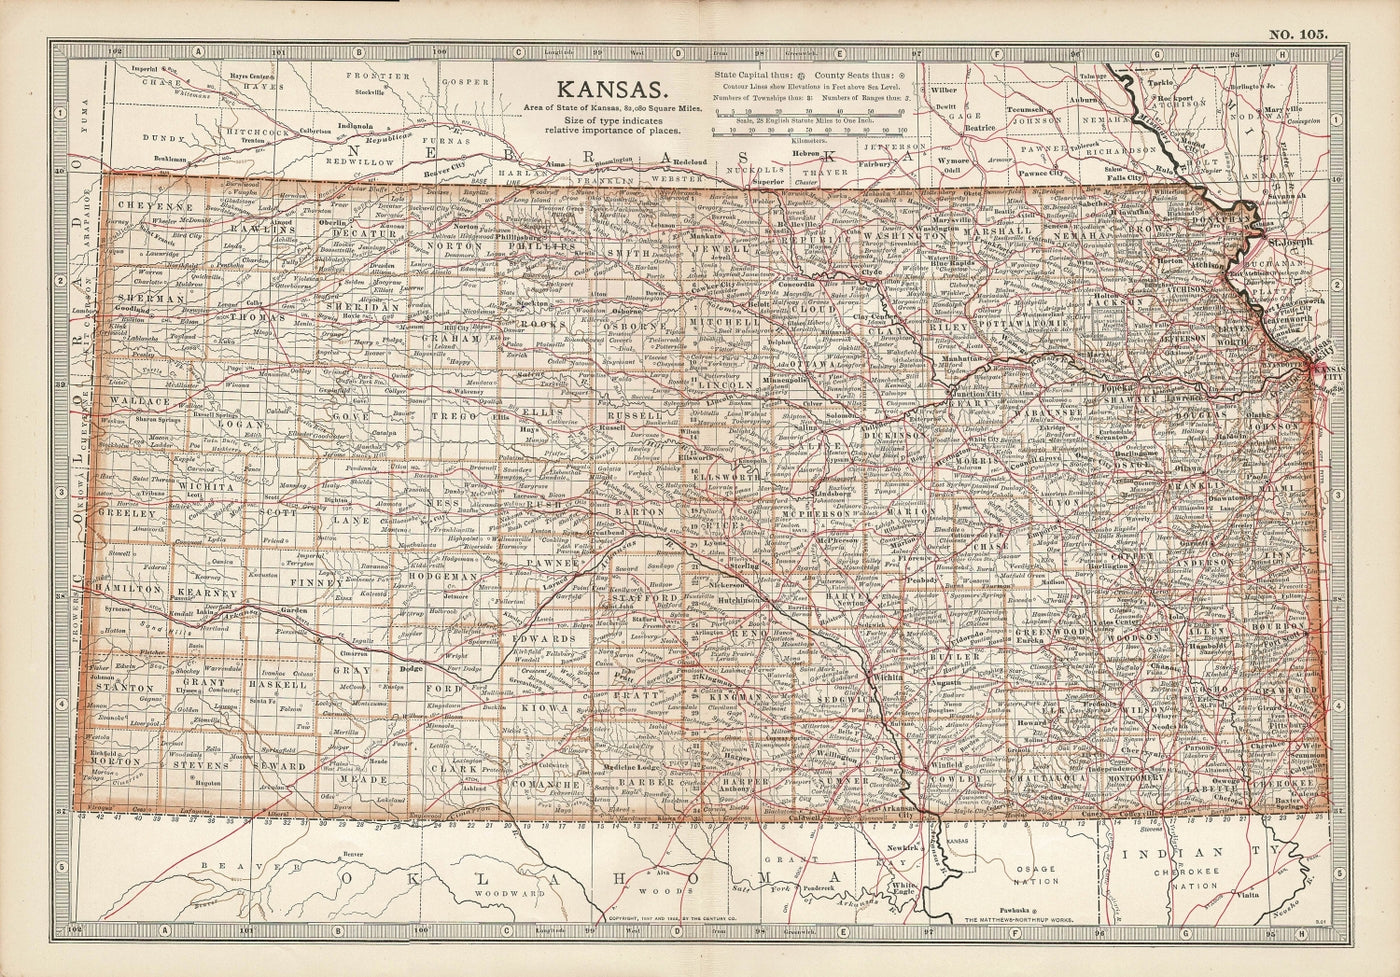 Kansas, Encyclopaedia Britannica 1903